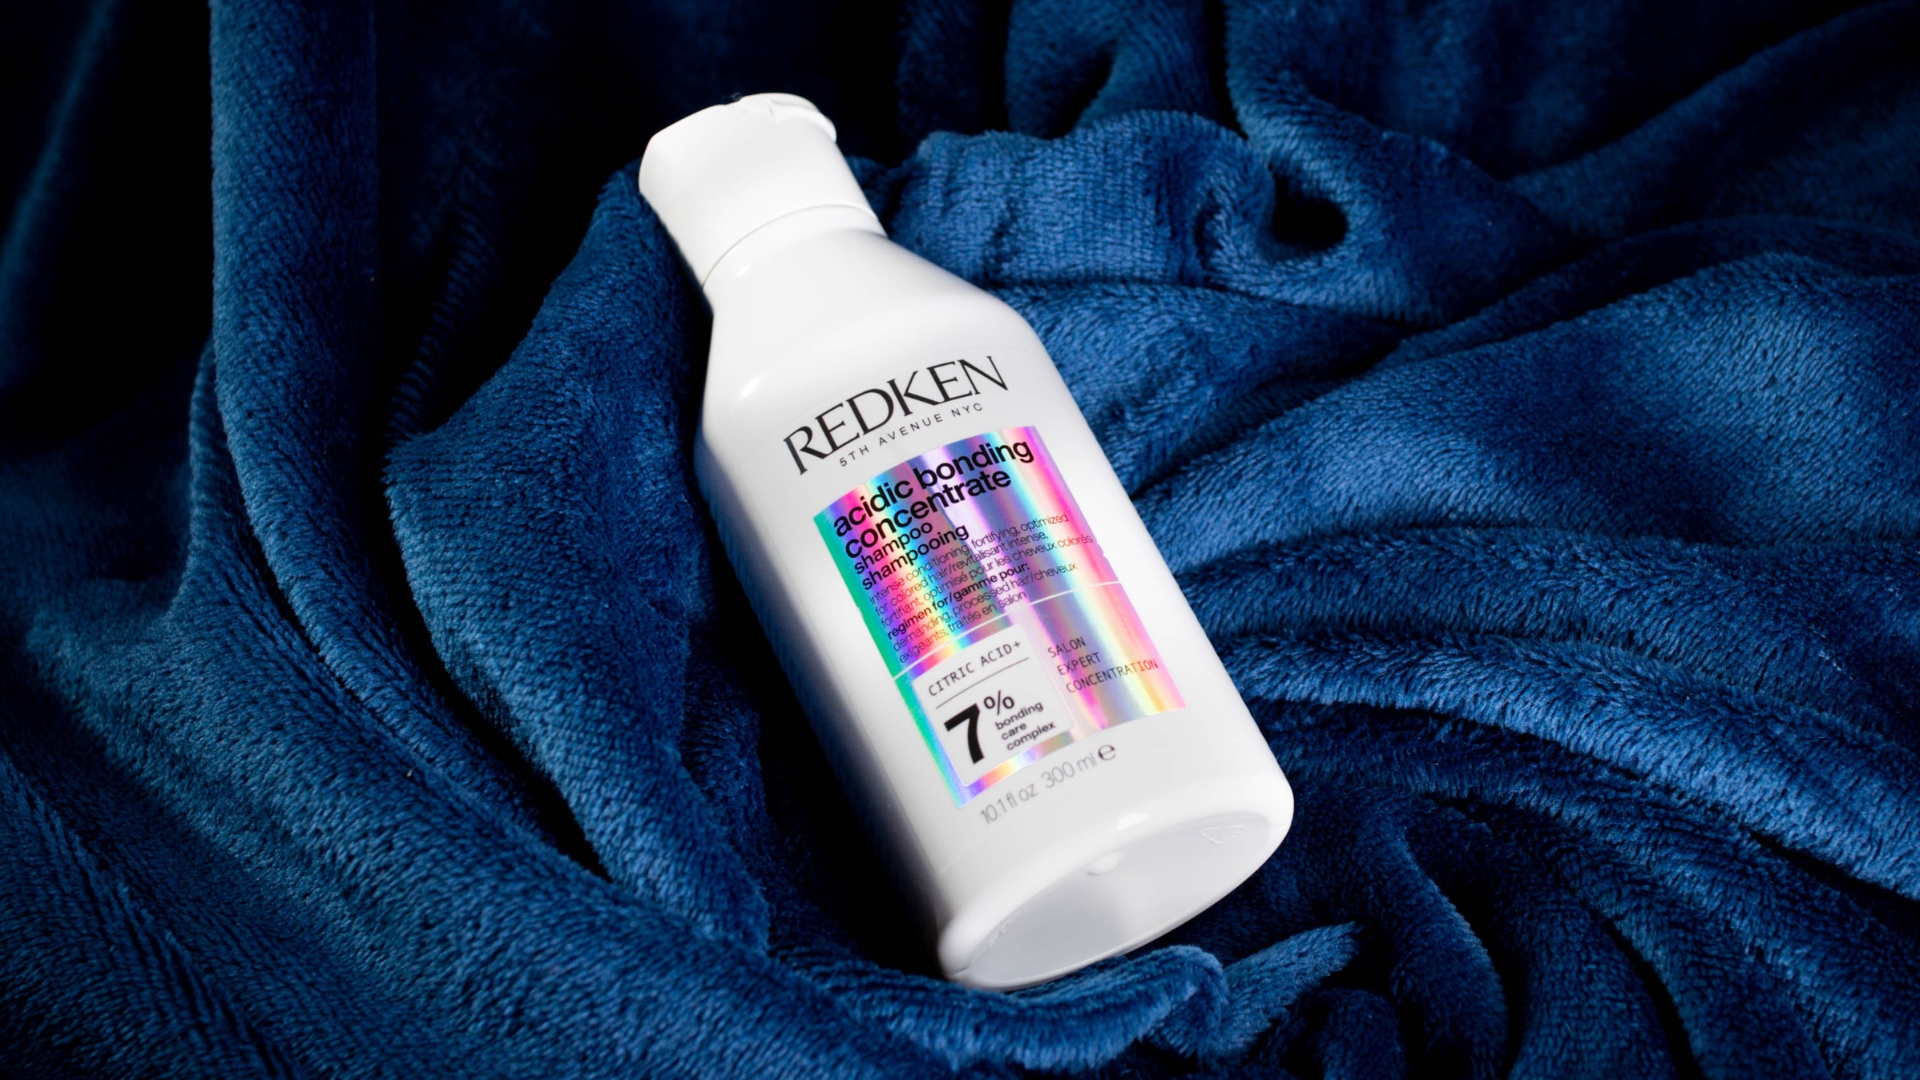 Redken – szampon Acidic Bonding Concentrate 300 ml